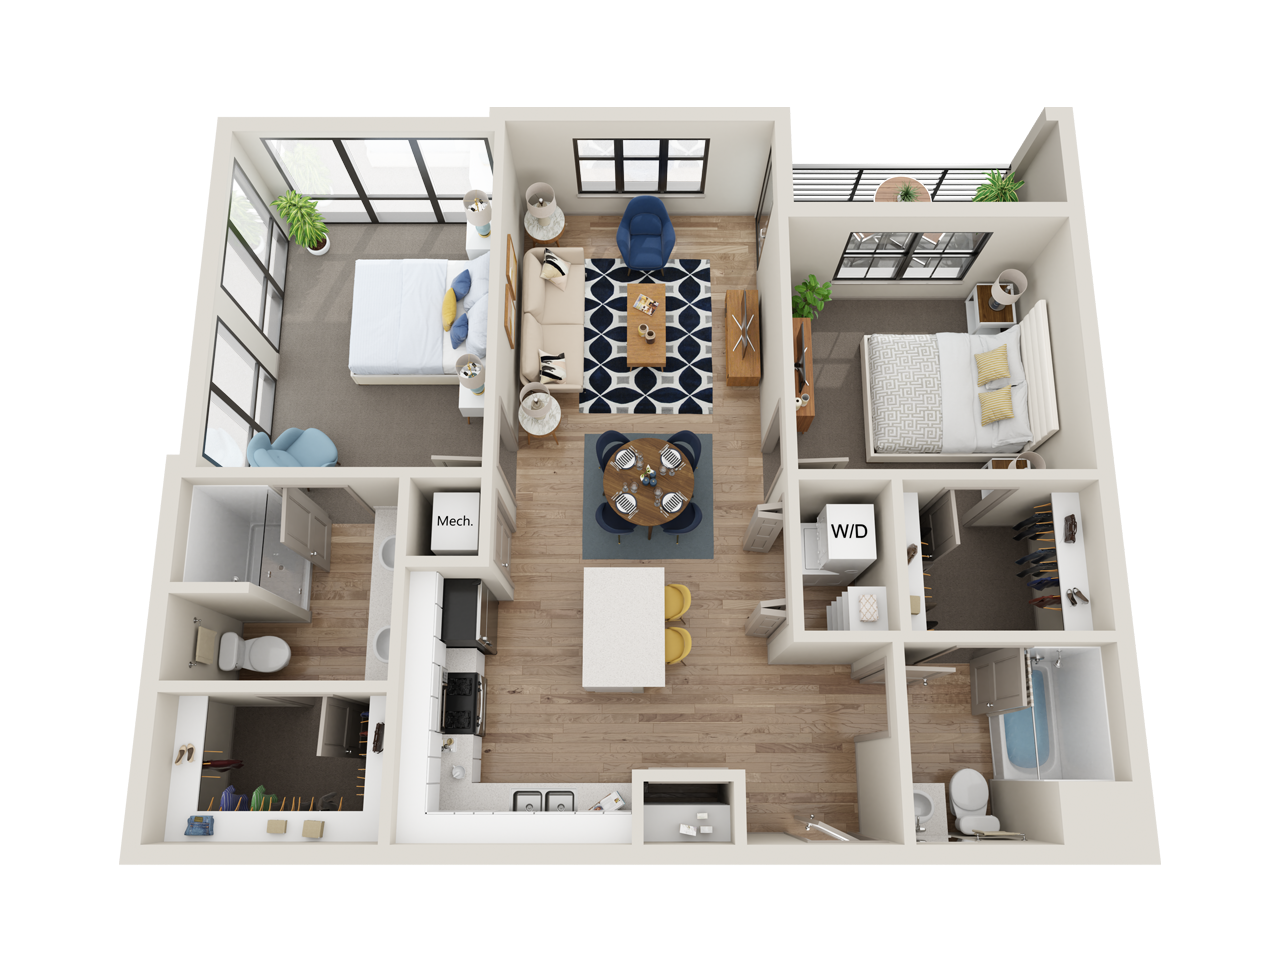 2 bedroom apartment floor plan at Converge KC in kansas city